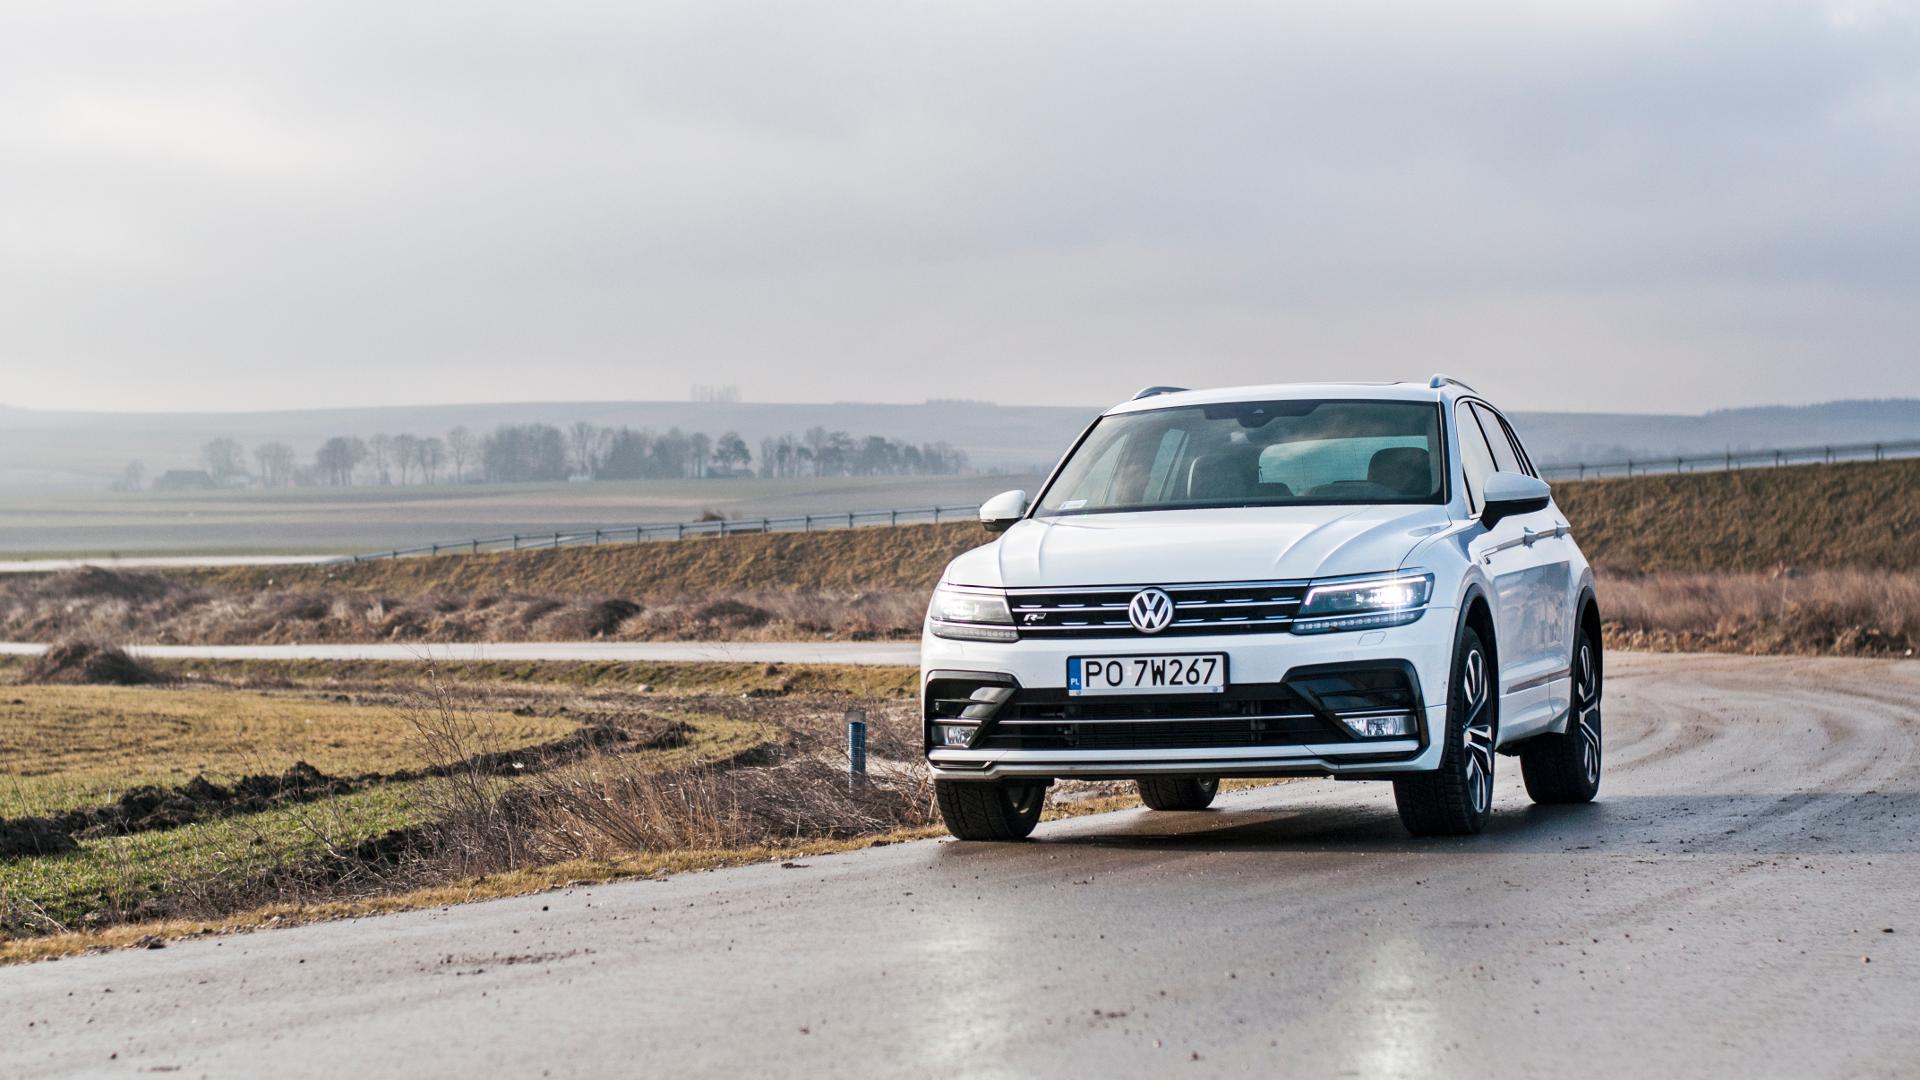 Volkswagen Tiguan towarzysz podróży • AutoCentrum.pl